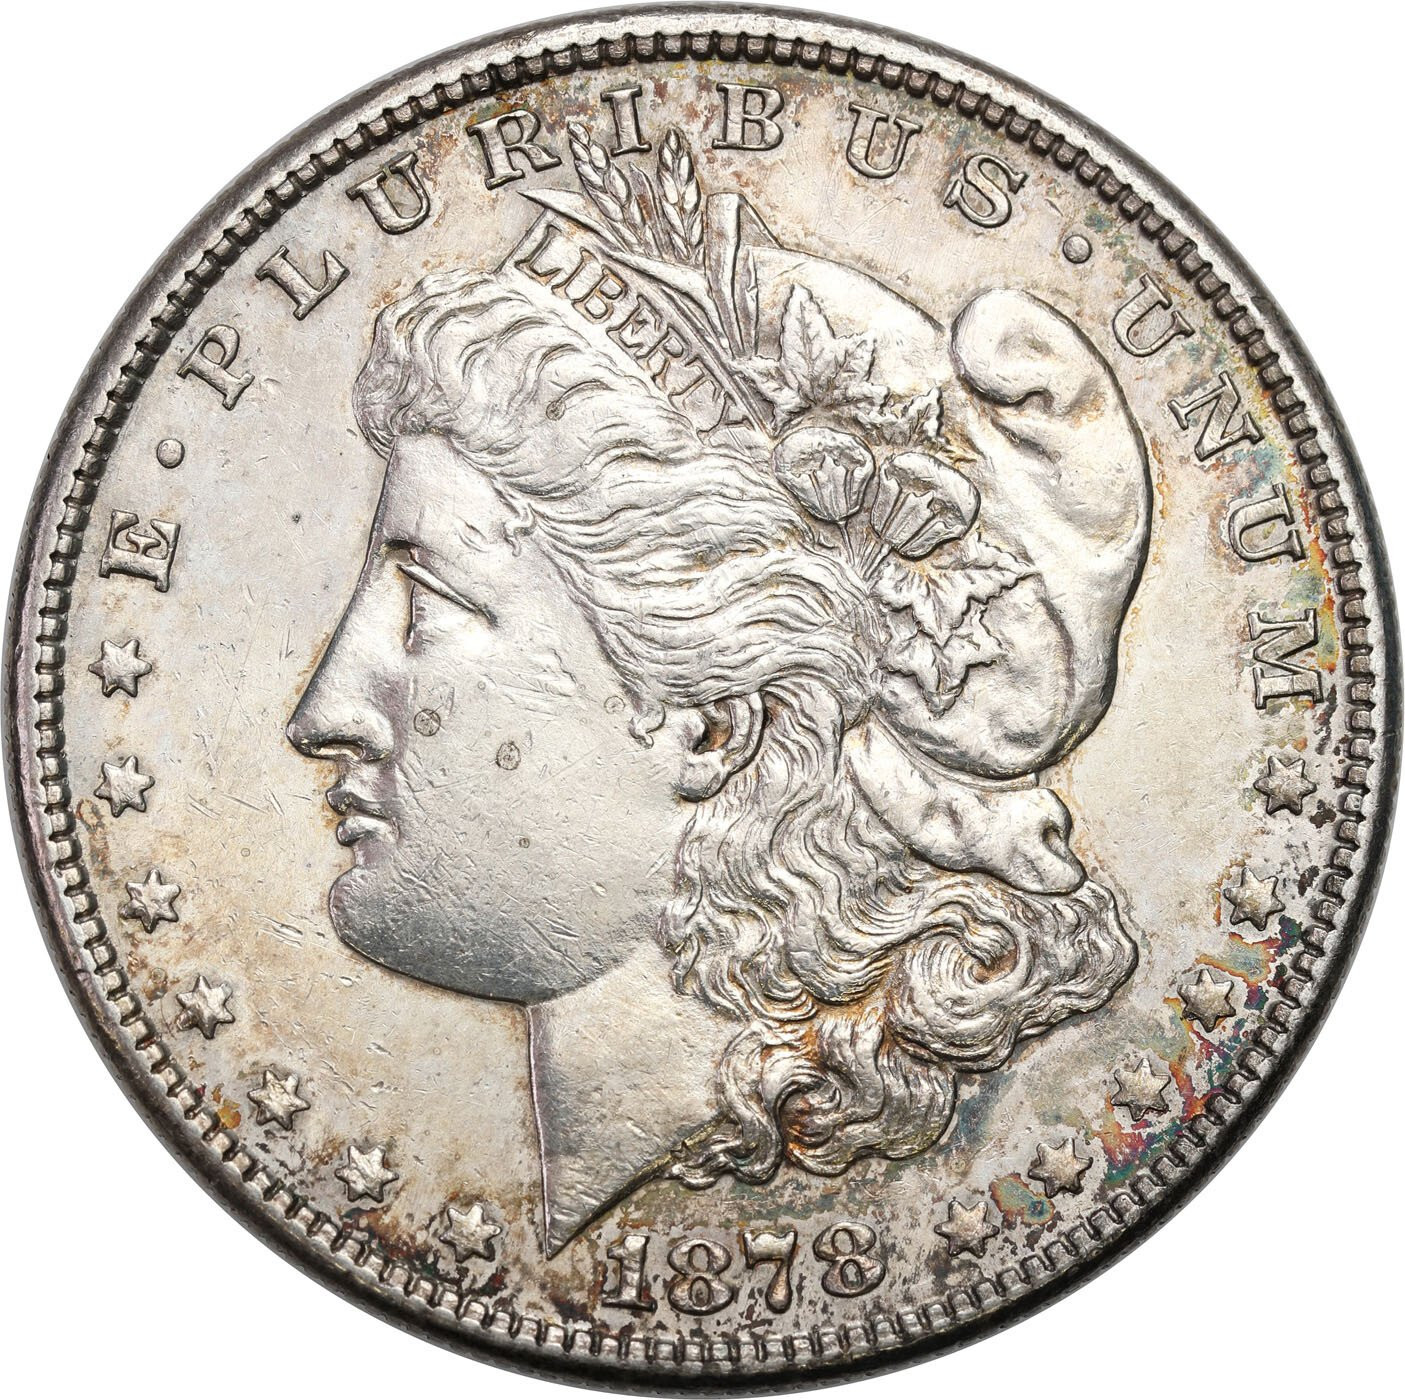 USA. Dolar 1878 S, San Francisco